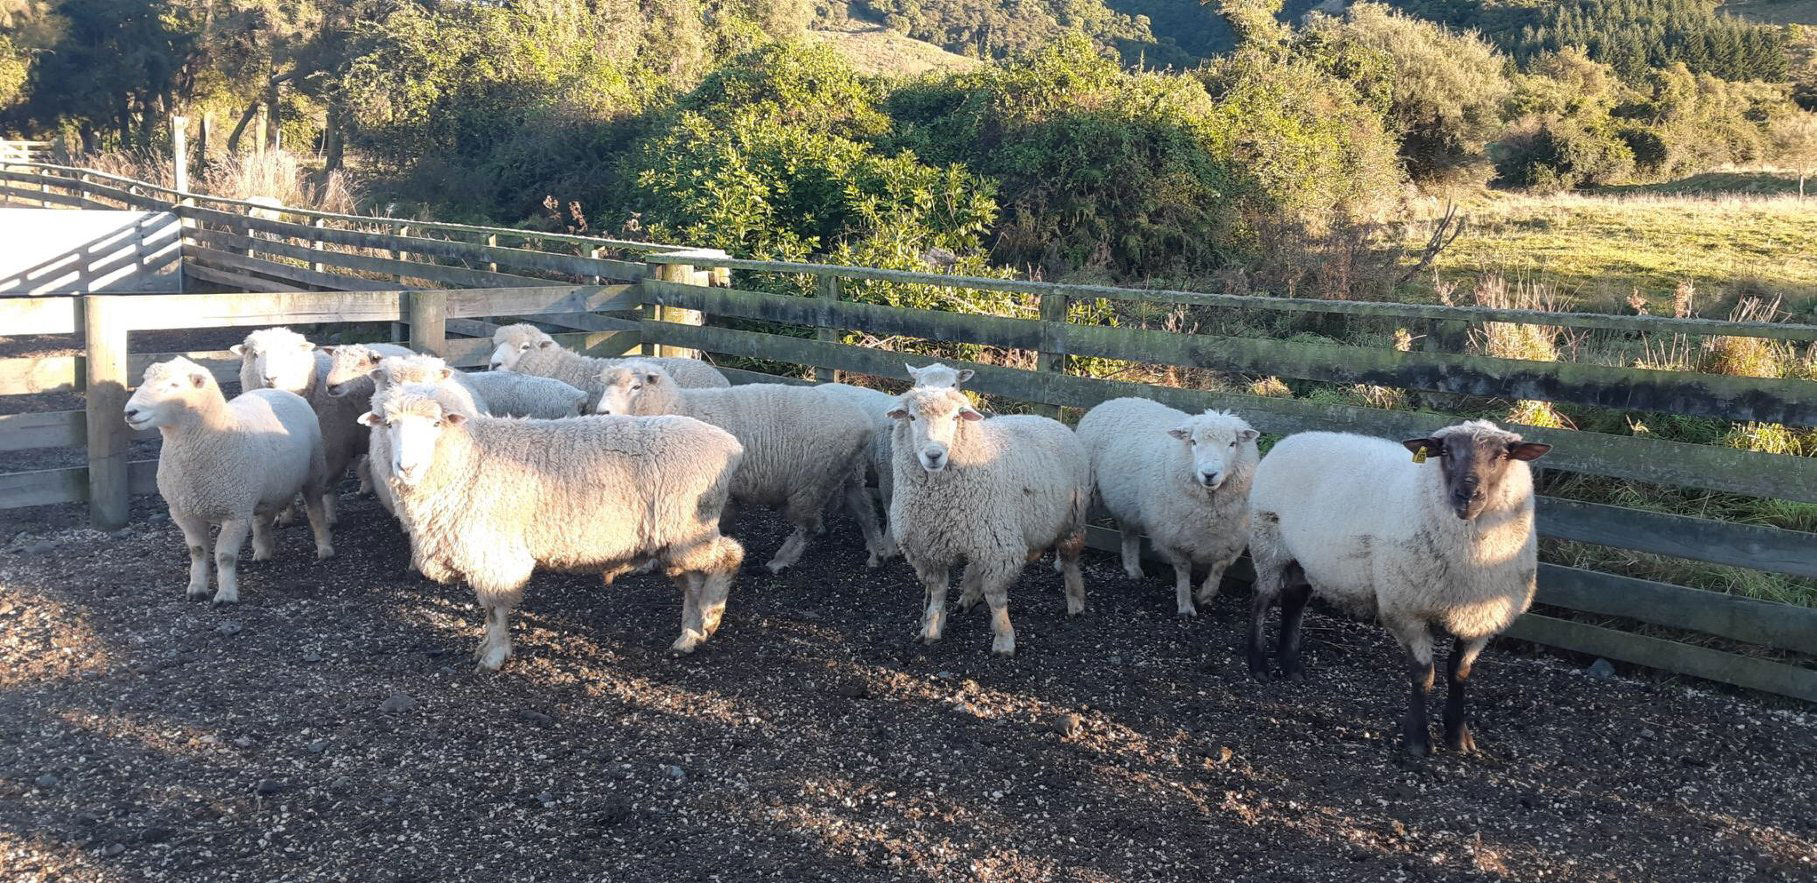 Post quake farming sheep performance 4WD tour